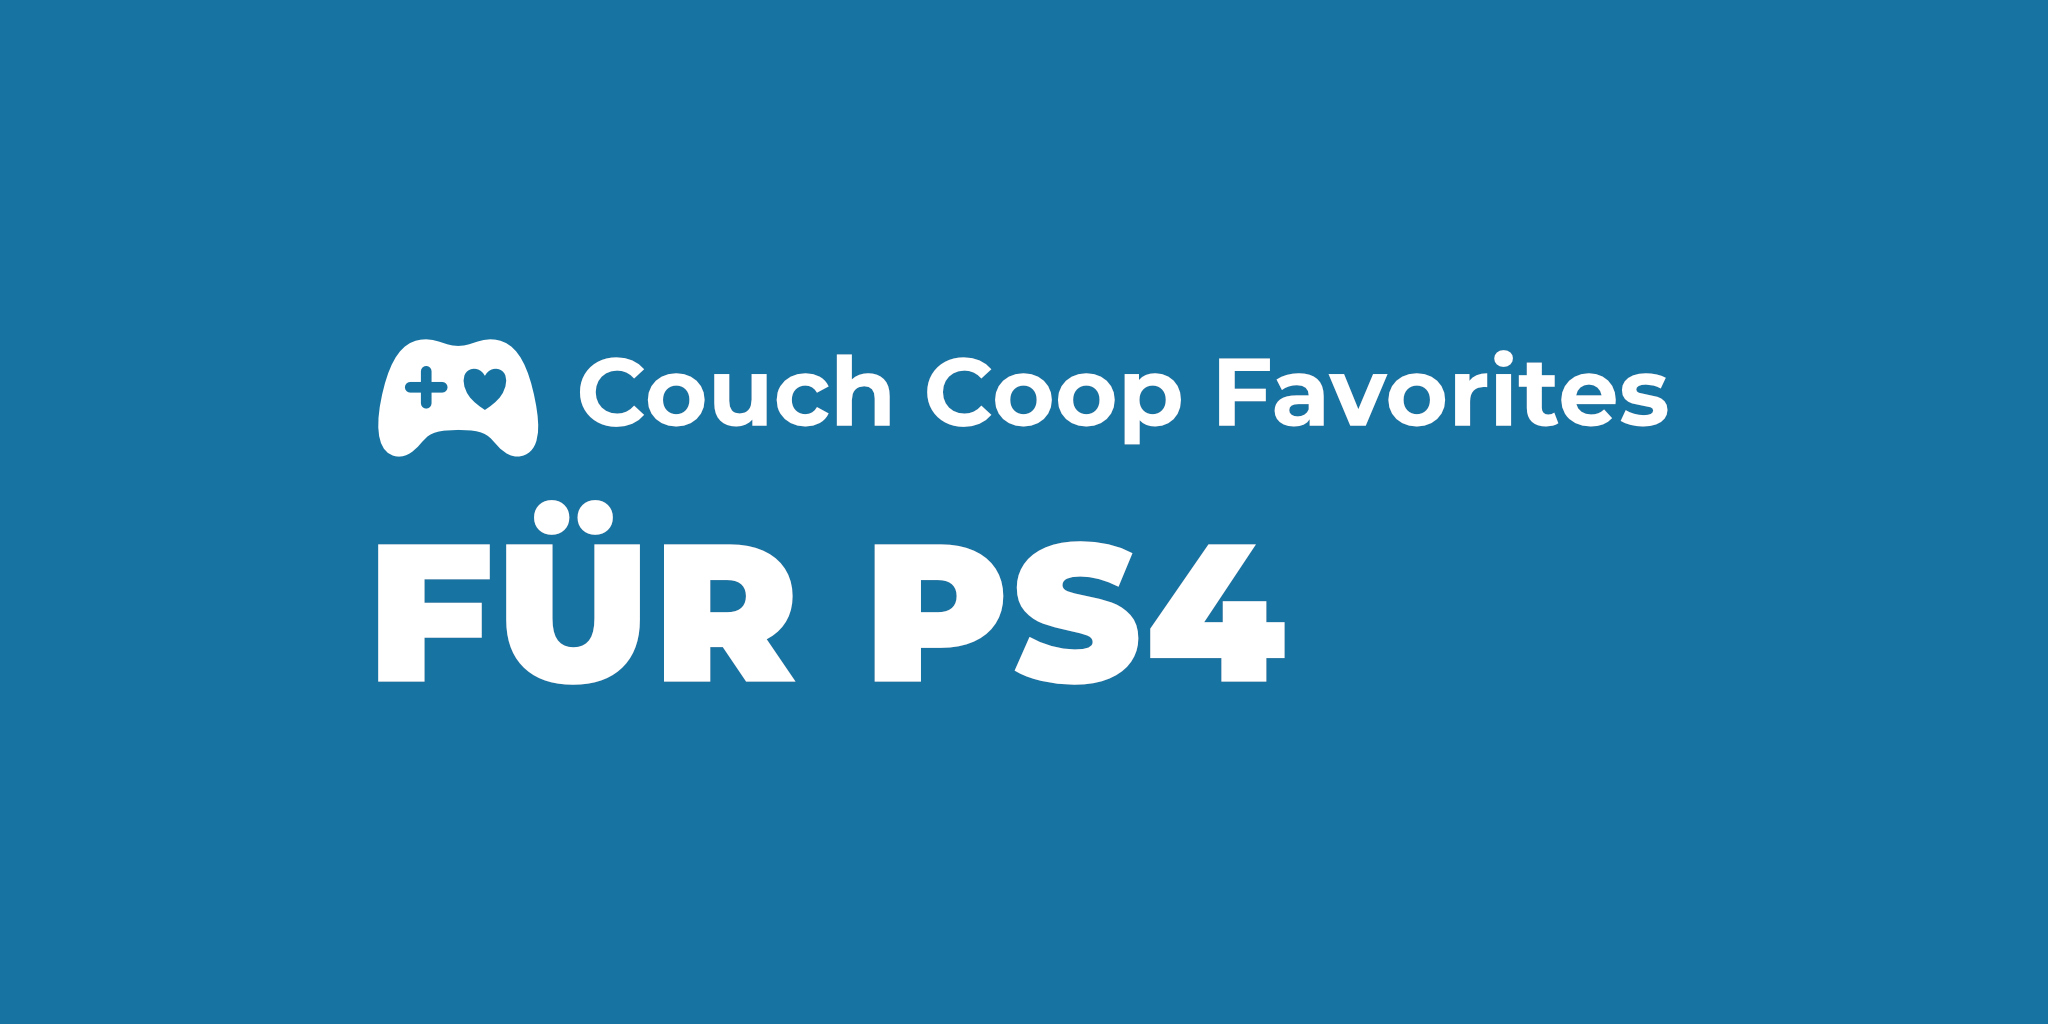 couchcoopfavorites.com